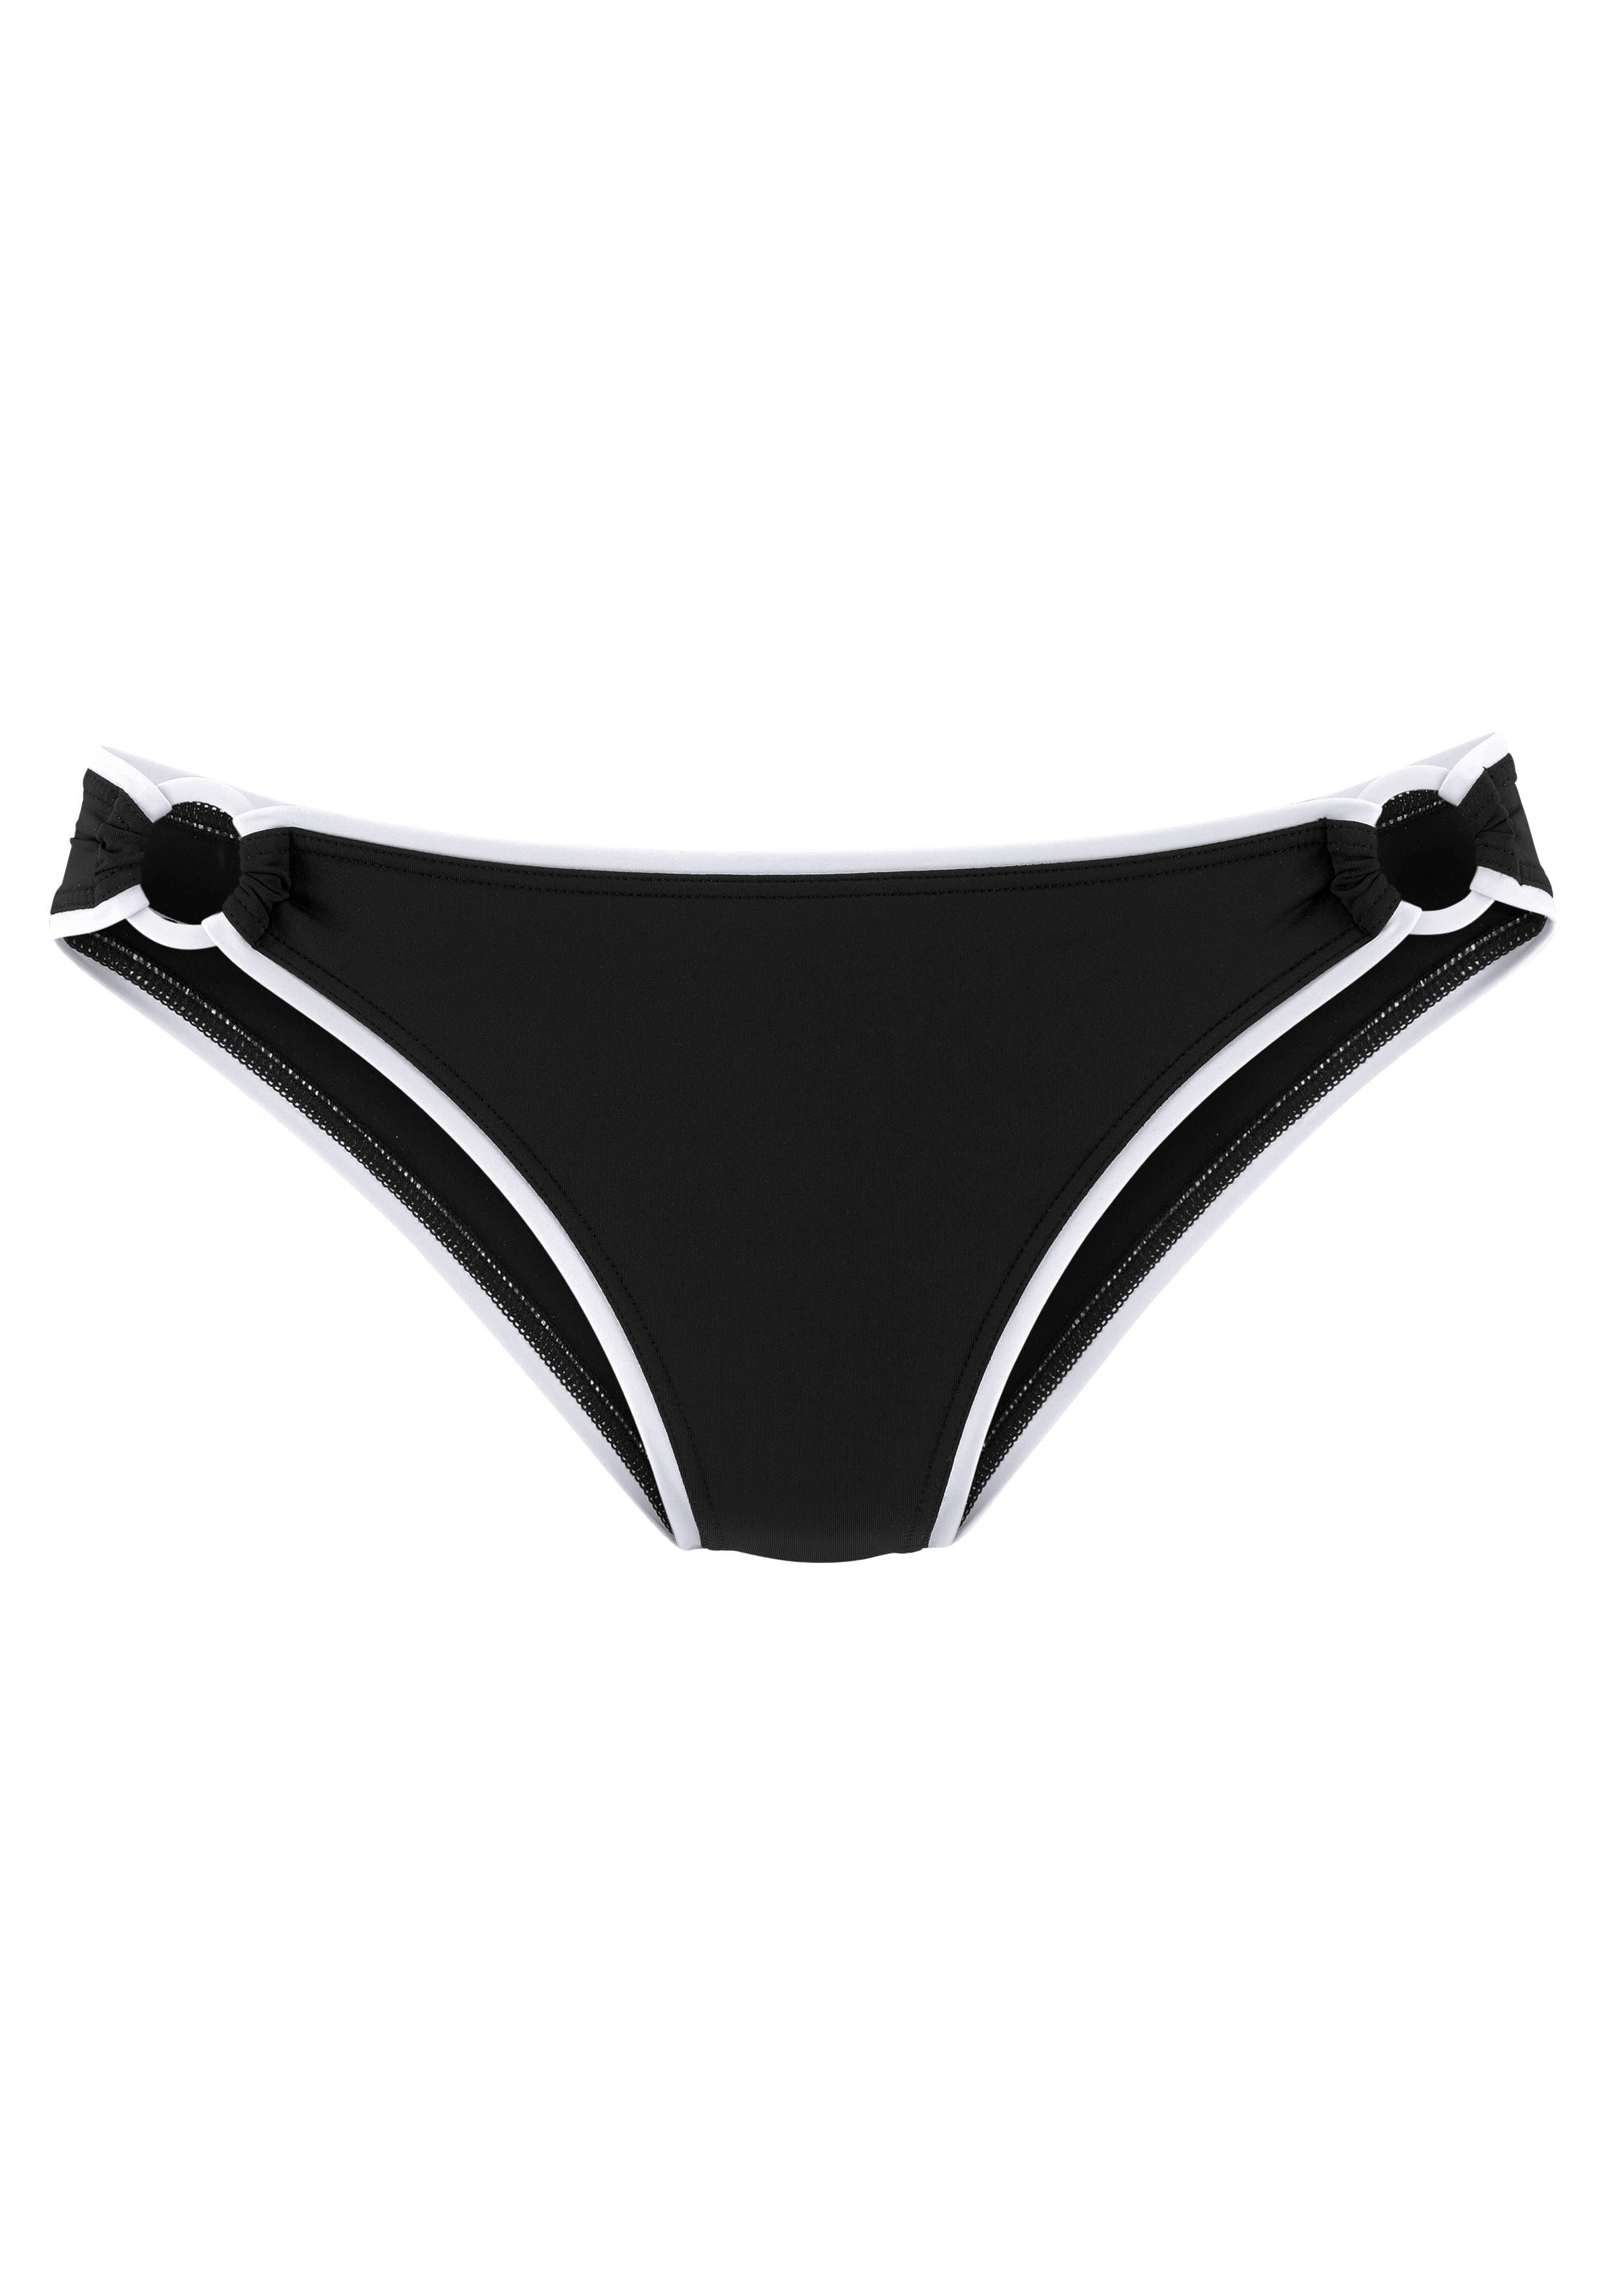 vivance bikinibroekje lorena met contrastkleurige piping en details zwart